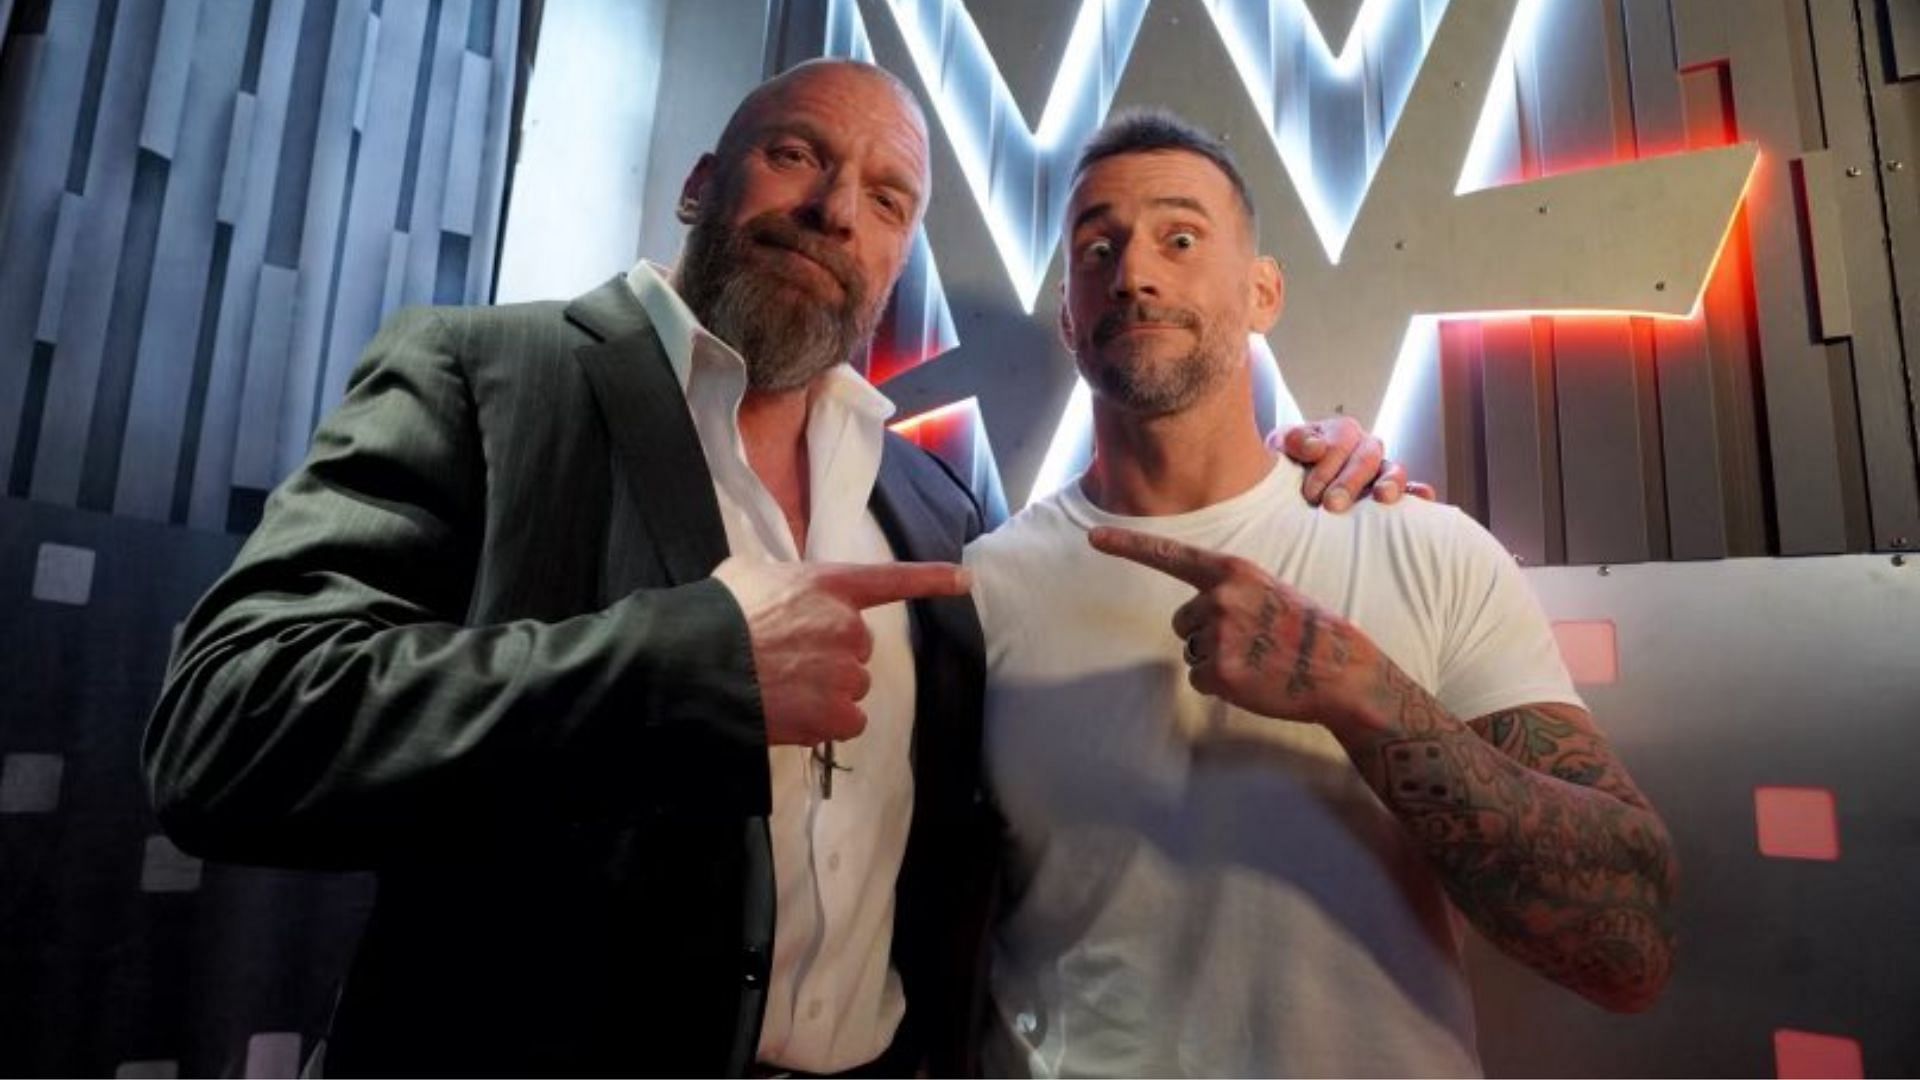 CM Punk really is back in WWE!